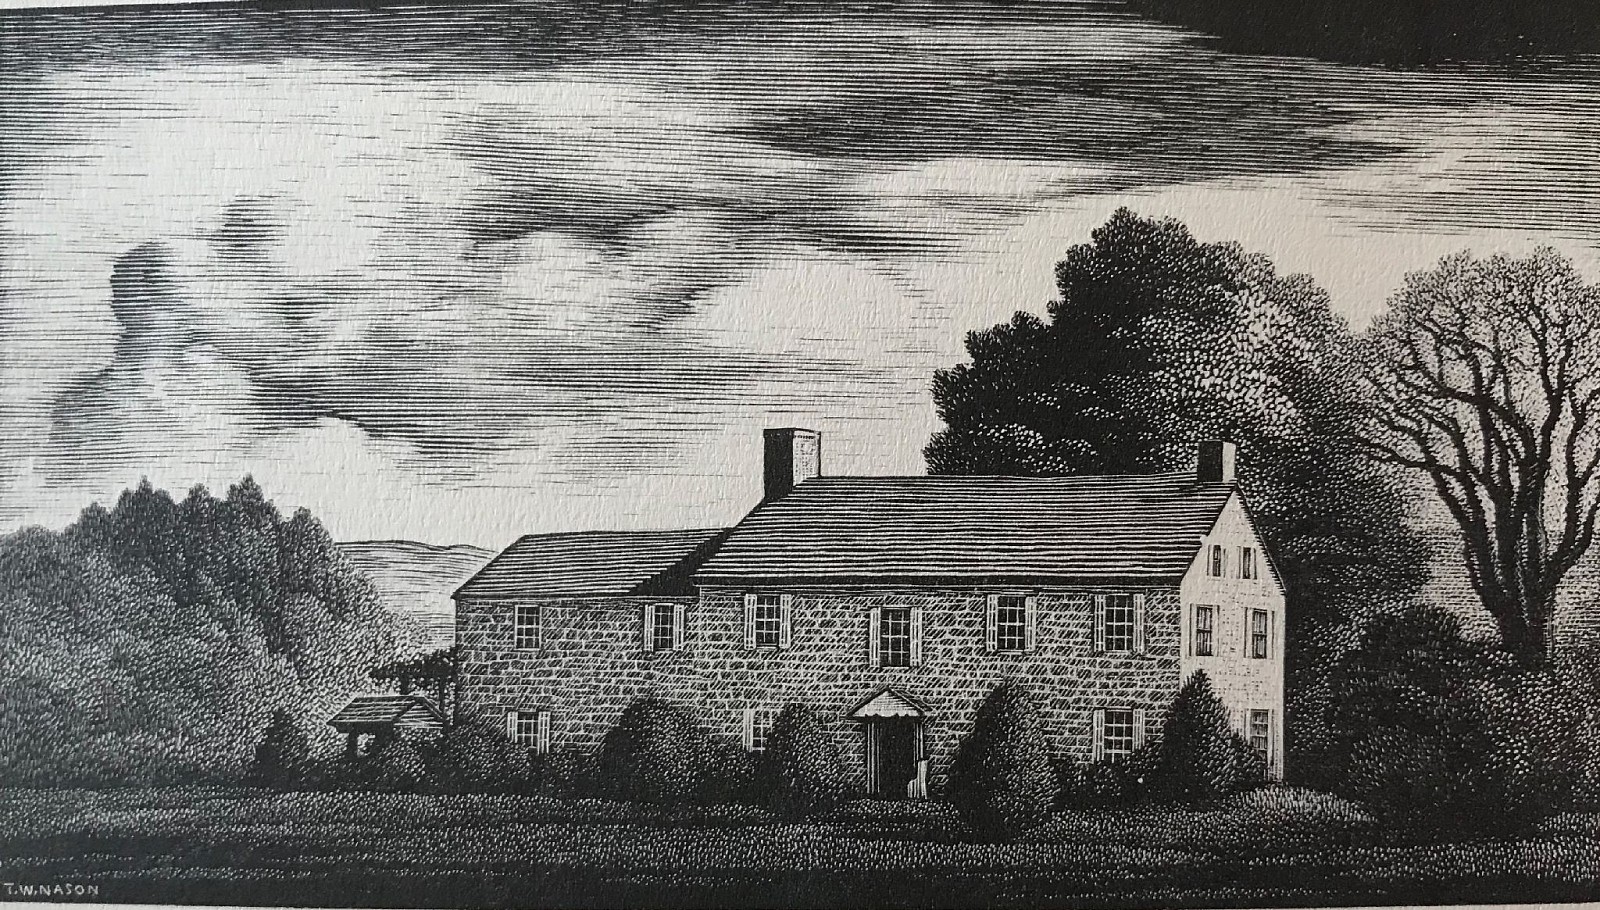 Thomas Willoughby Nason, Bucks County Farmhouse, 1937
wood engraving, 3 5/8" x 6 1/2", BPL #220
THFA 05/17.08
$300